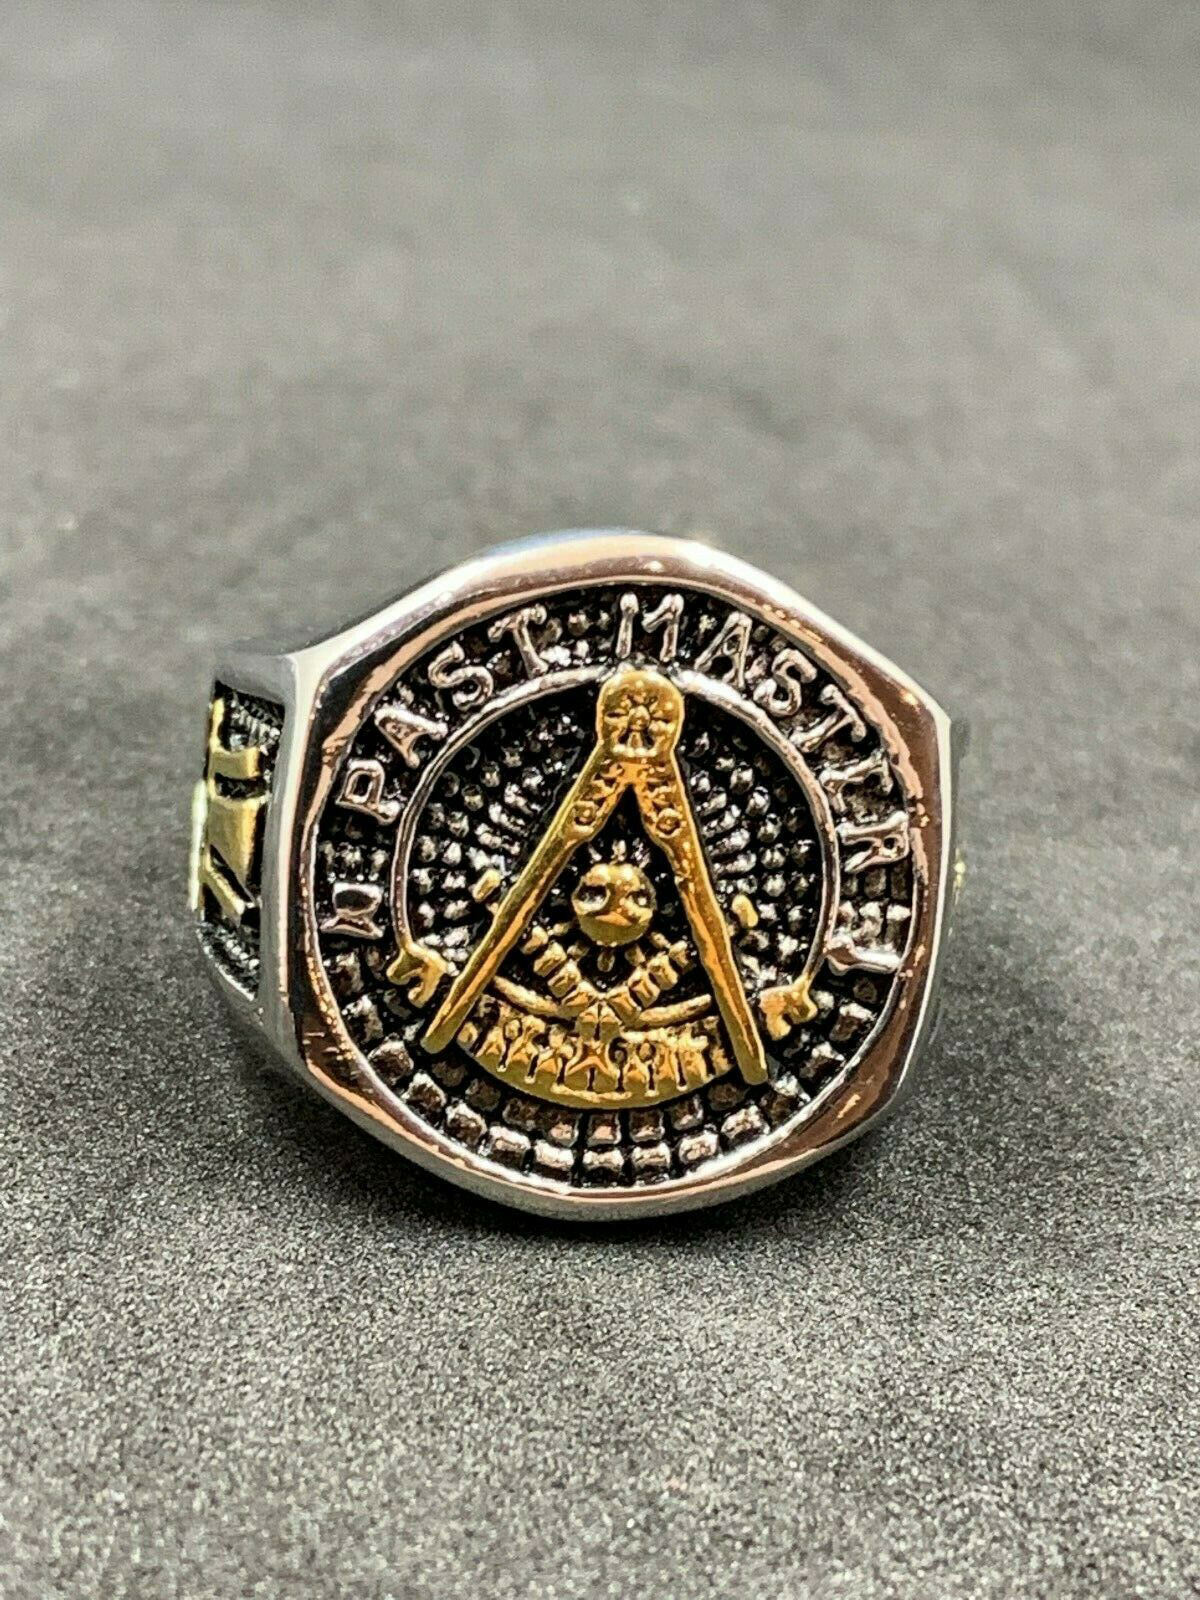 Men Past Master Degree Masonic Ring York Rite Freemason 24K Gold Tone Size 9-15